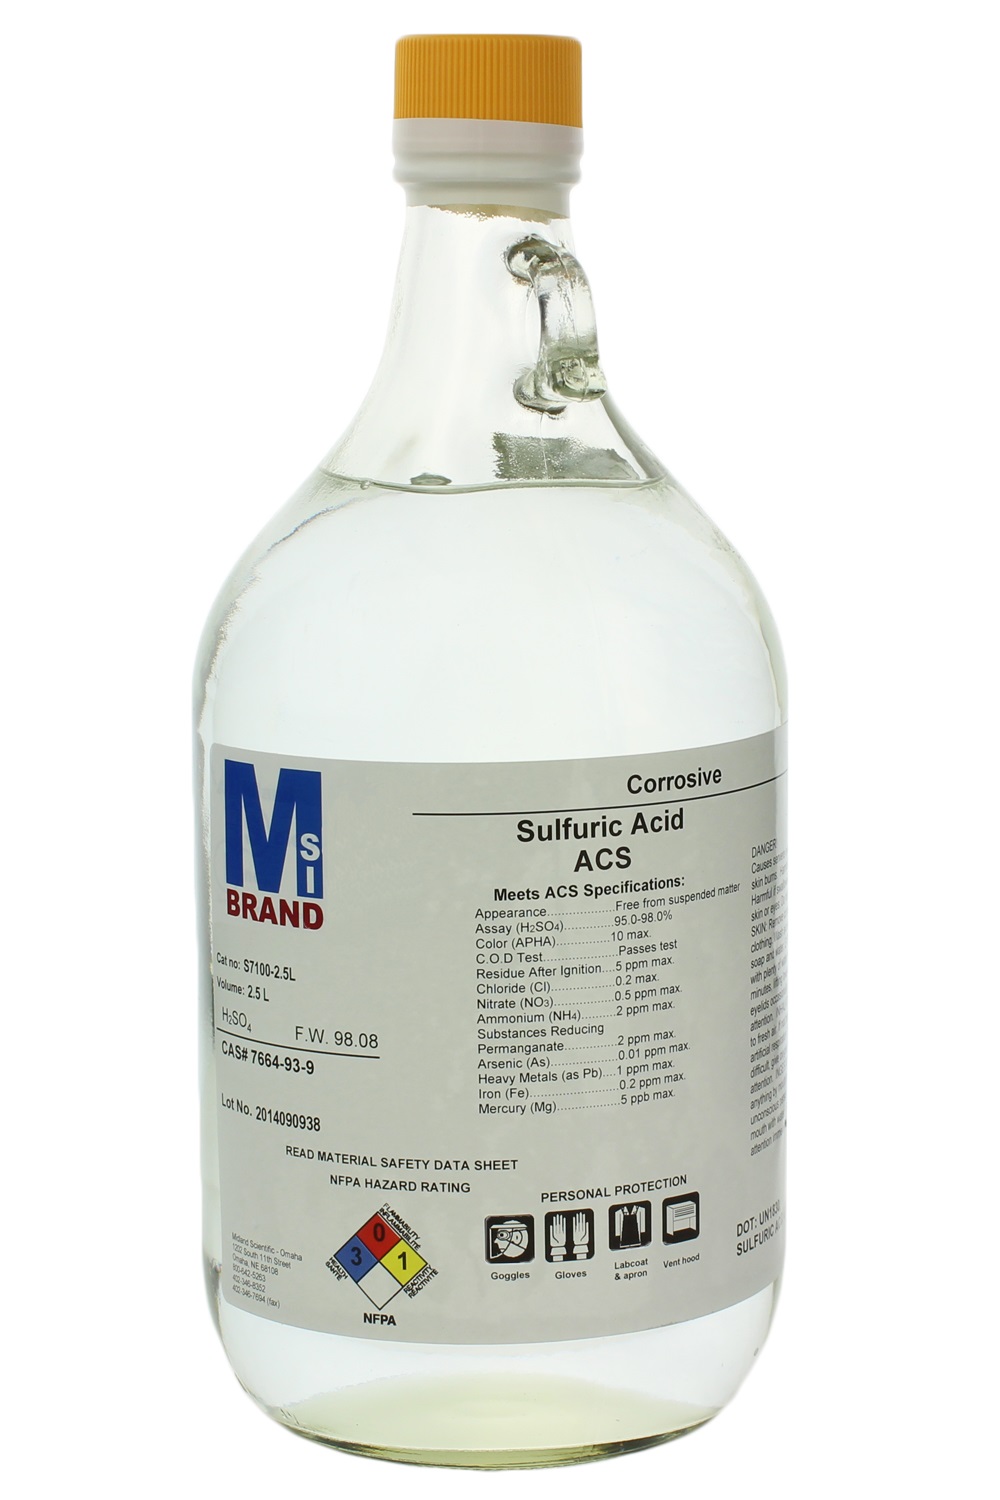 MSI Brand ACS Grade Sulfuric Acid